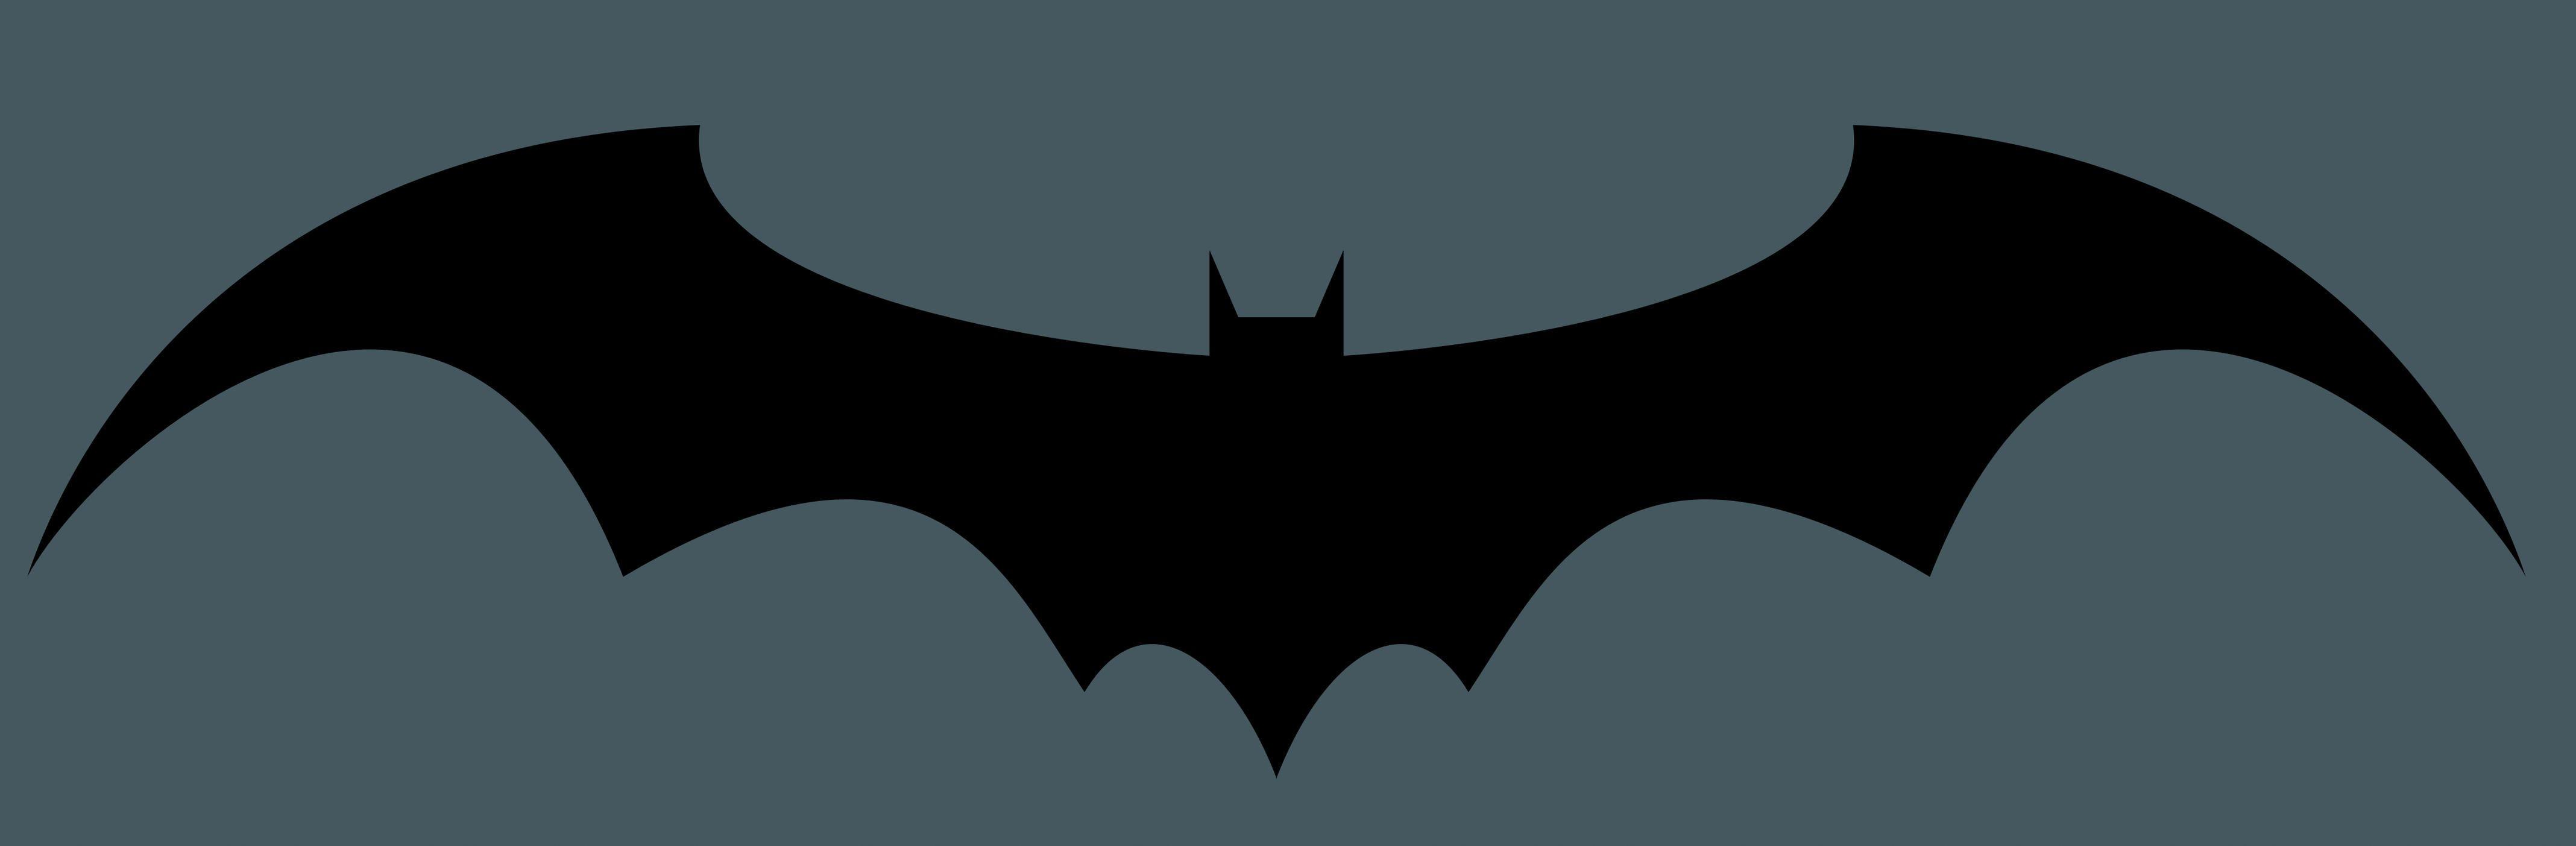 Batman Arkham Asylum Logo - Batman Arkham Asylum V1 (Request) by Angel-Of-DeathX1 on DeviantArt